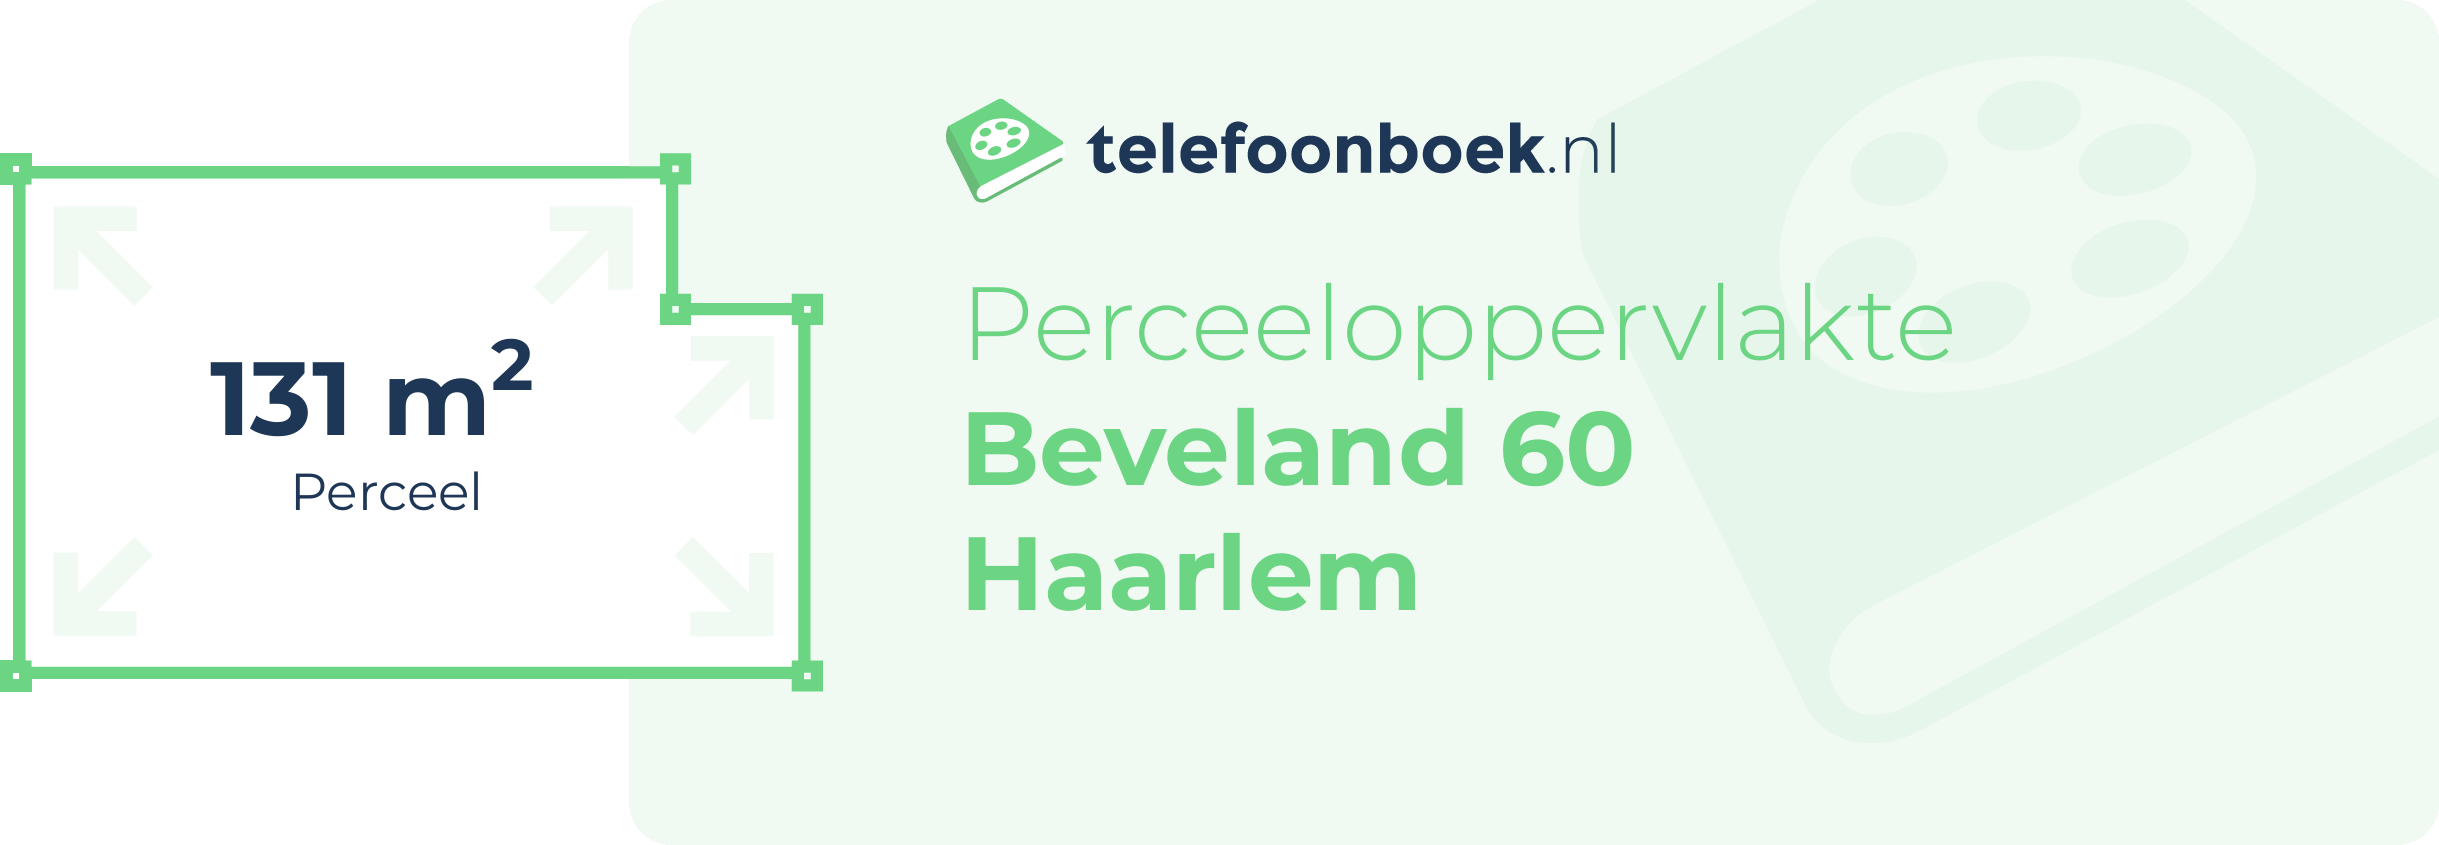 Perceeloppervlakte Beveland 60 Haarlem